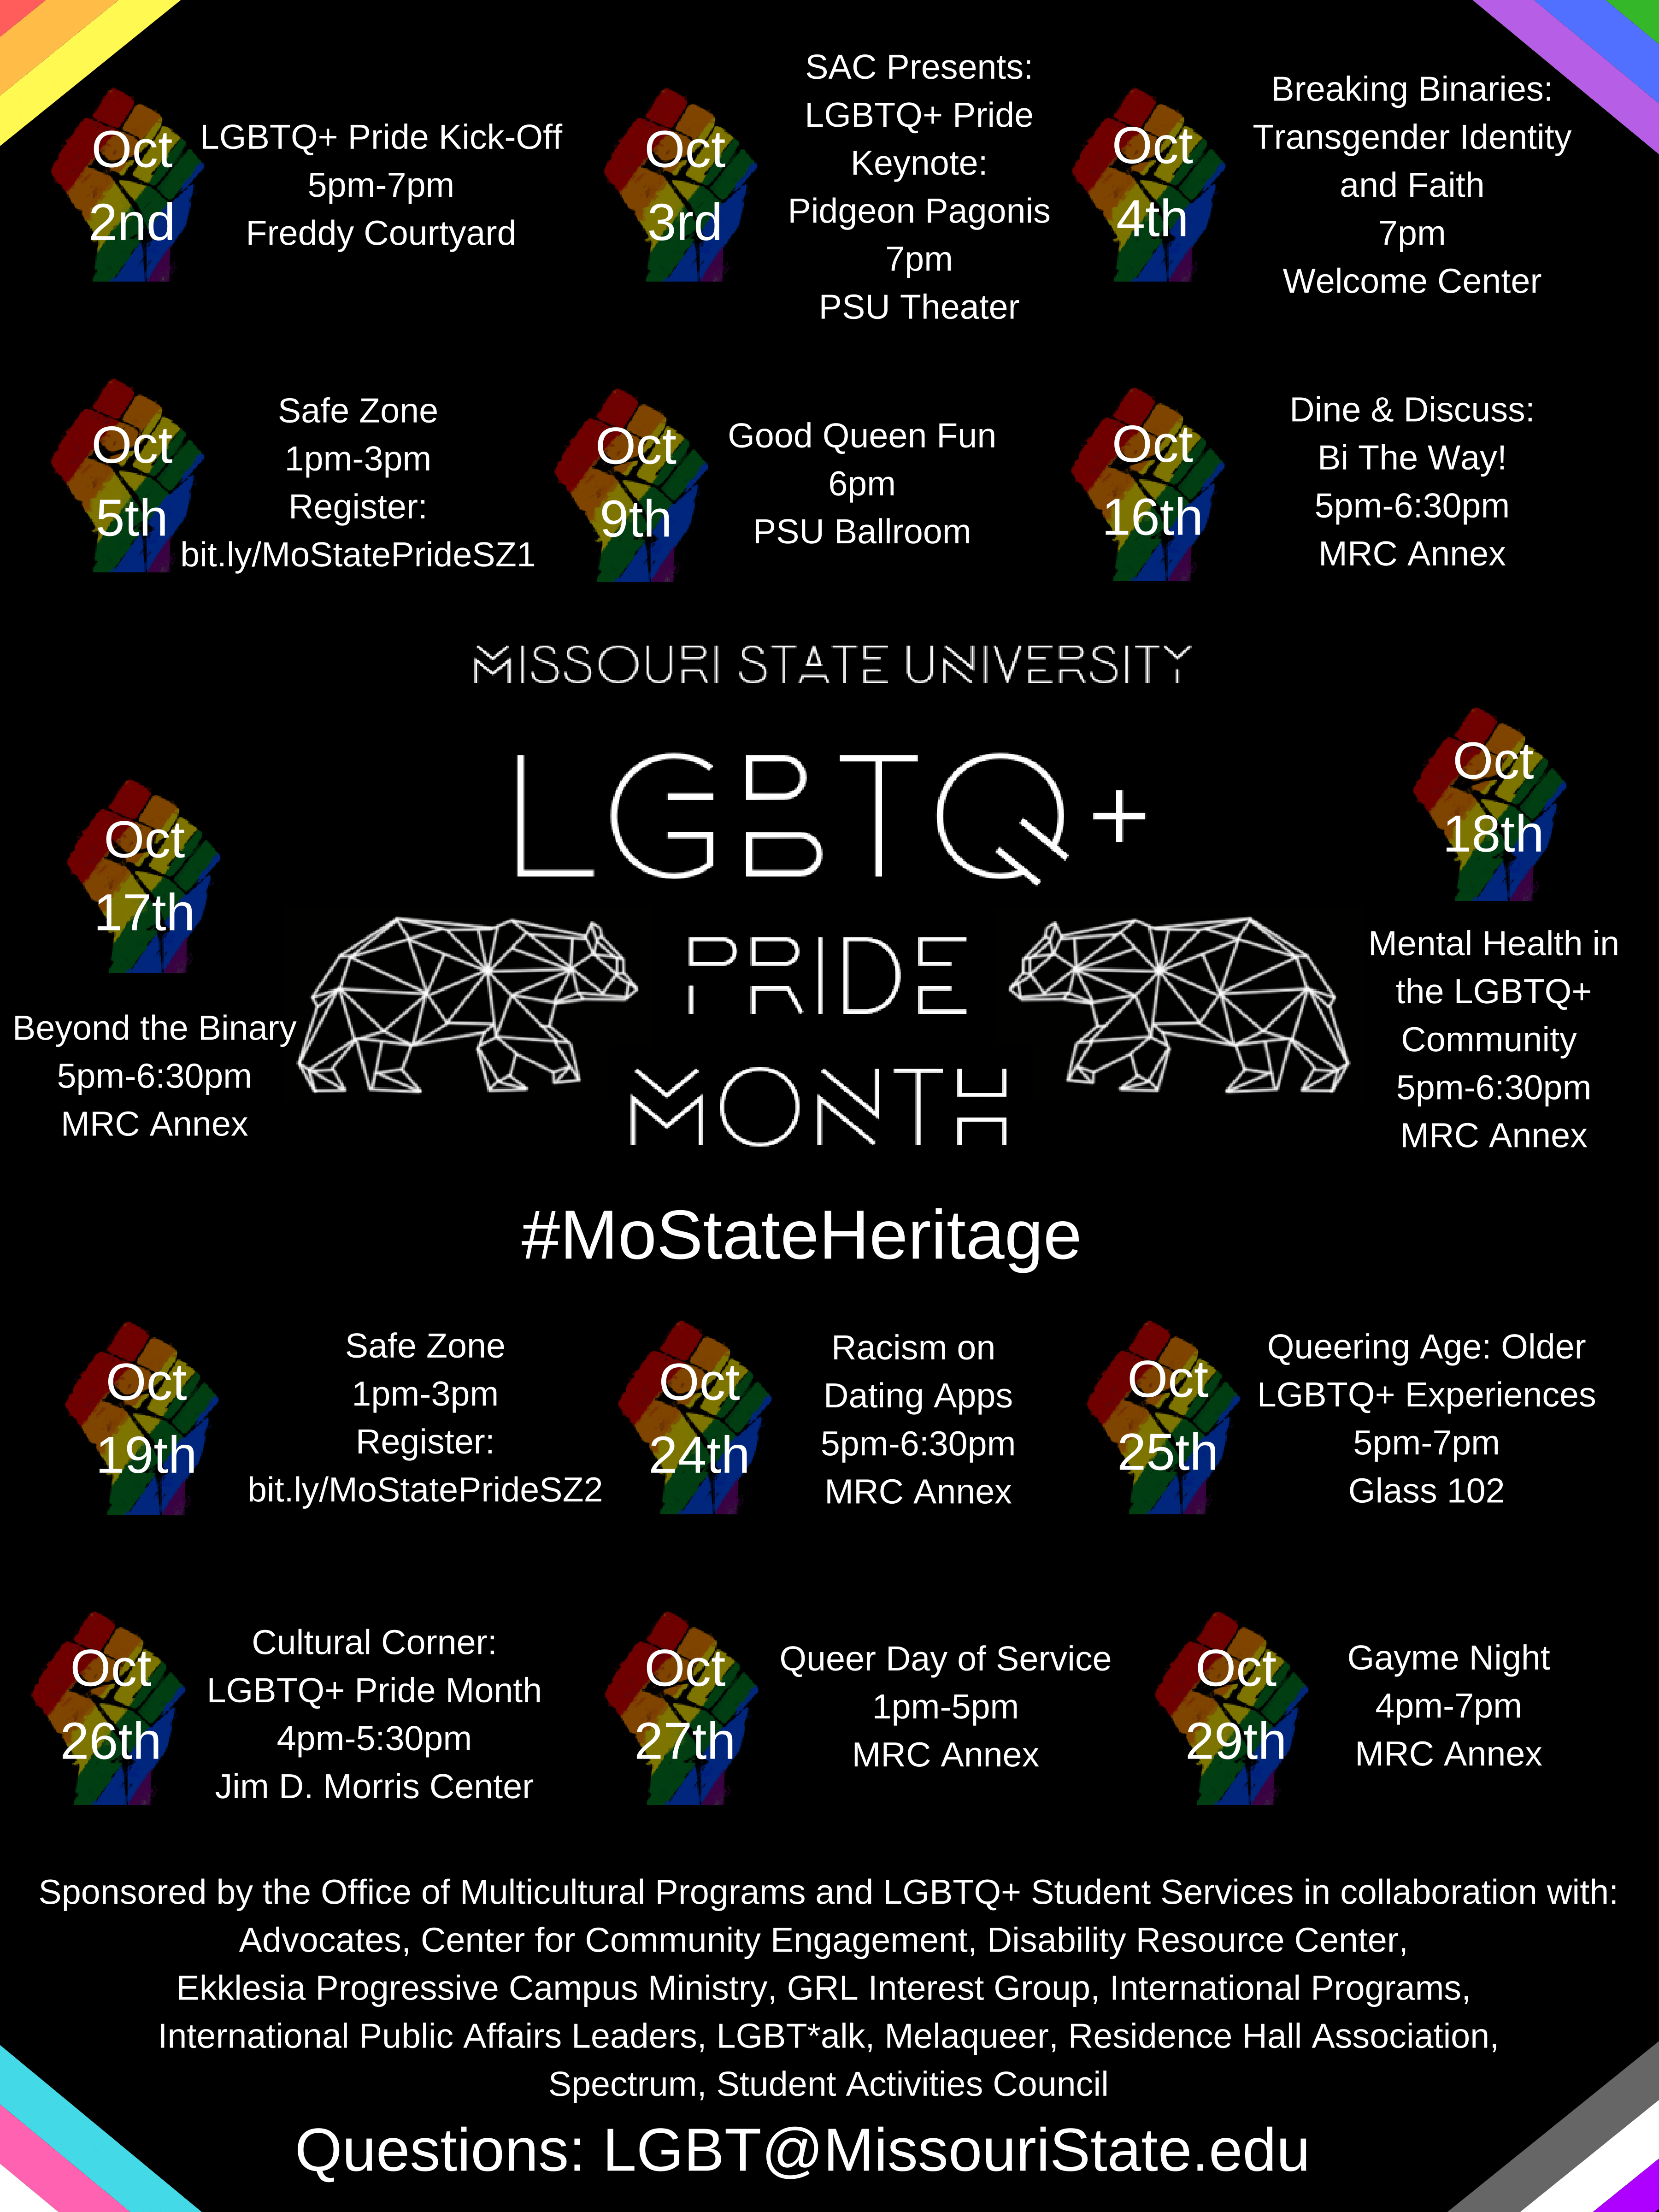 LGBTQ+ Pride Month 2018